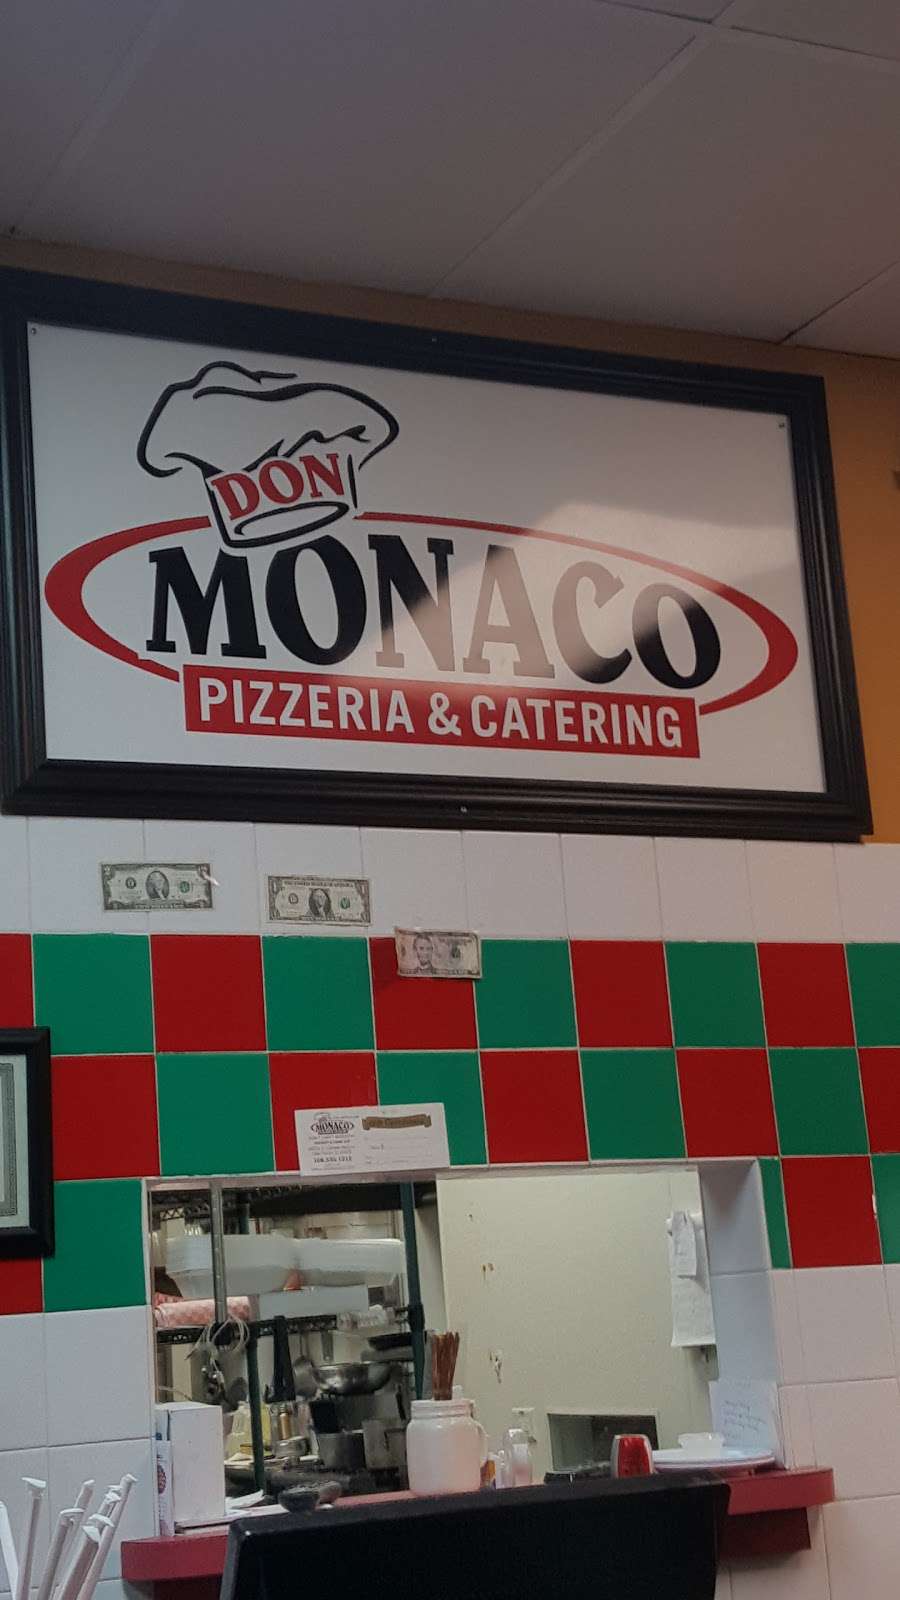 Don Monaco Pizzeria & Catering | 14721 Central Ave, Oak Forest, IL 60452, USA | Phone: (708) 535-1212